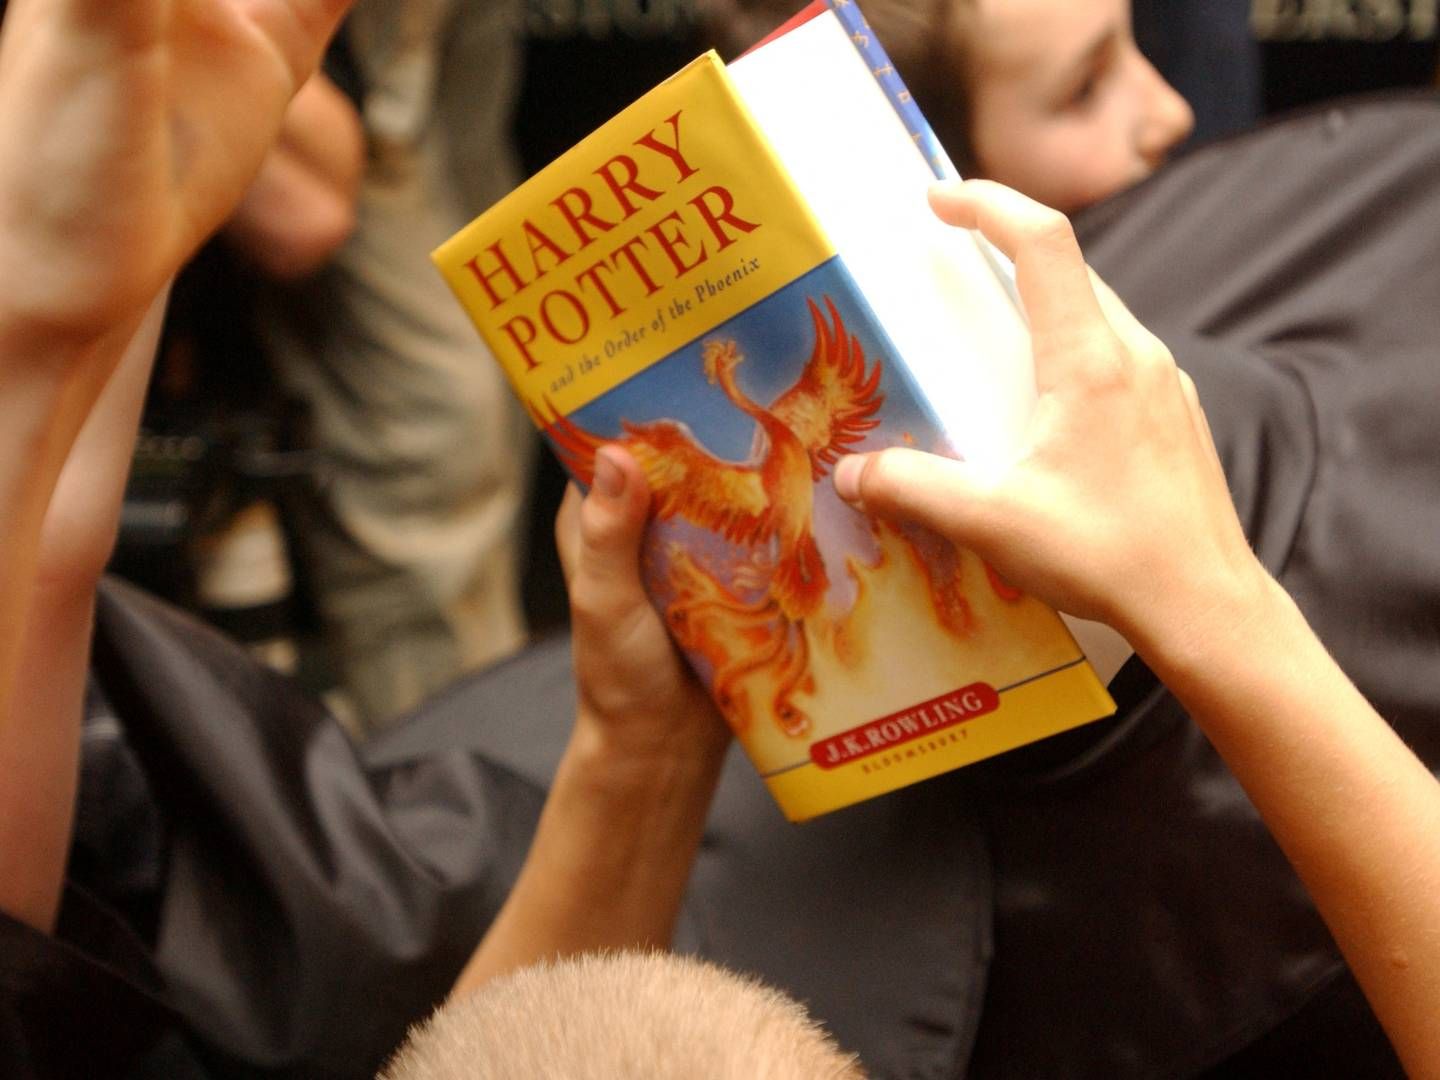 Den populære historie om troldmanden Harry Potter udkommer snart som TV-serie. | Foto: Stringer Uk